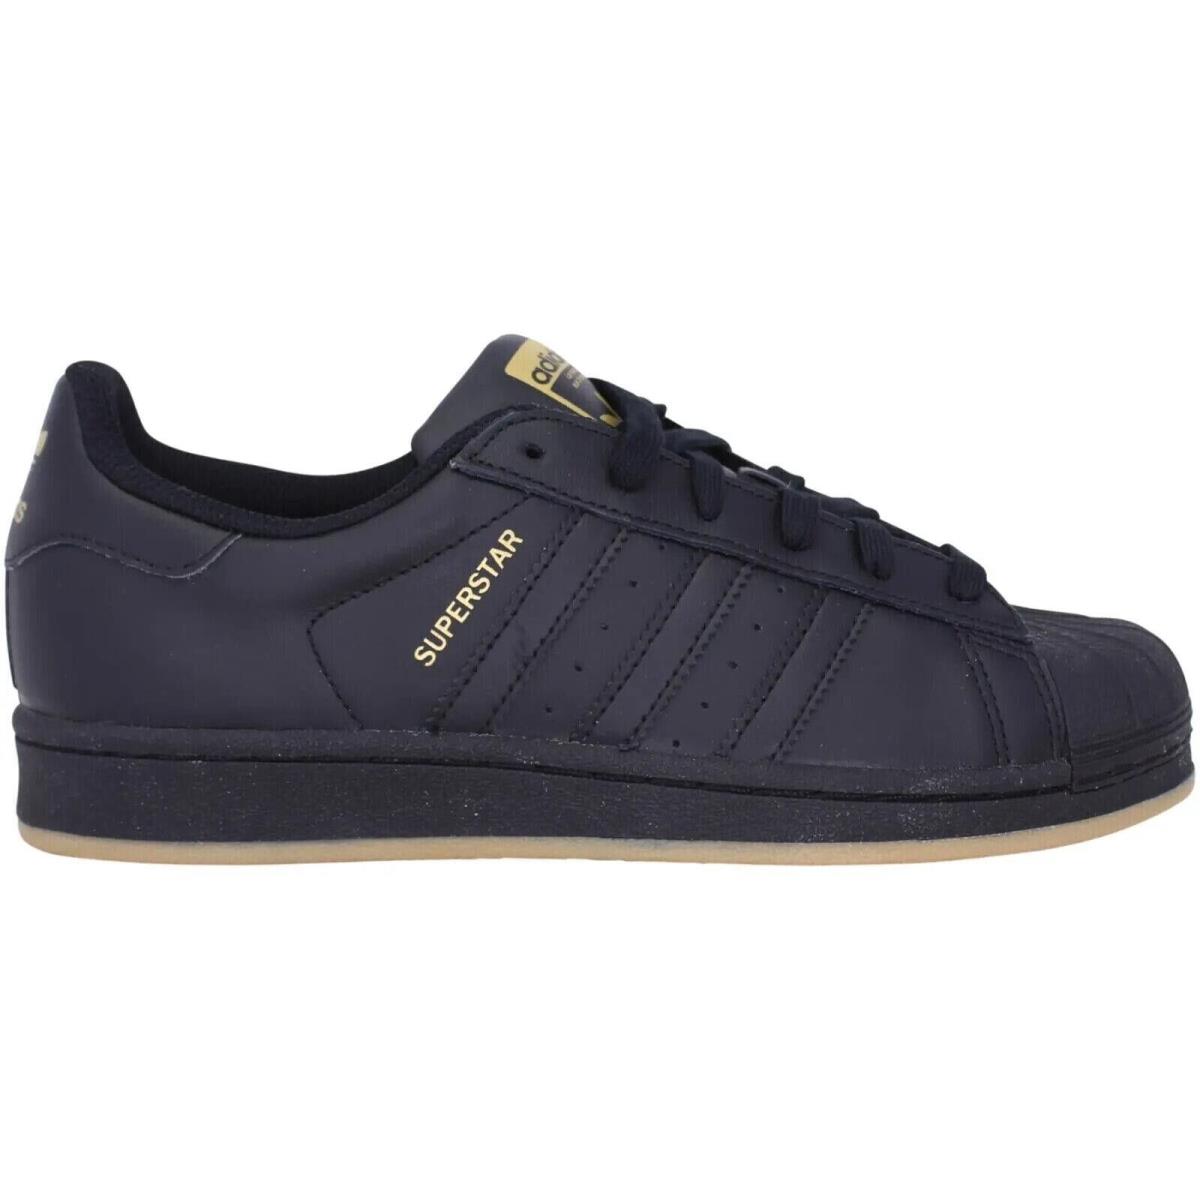 Adidas Superstar BY4358 Men`s Black Gum Leather Sneaker Shoes Size US 8.5 HS1380